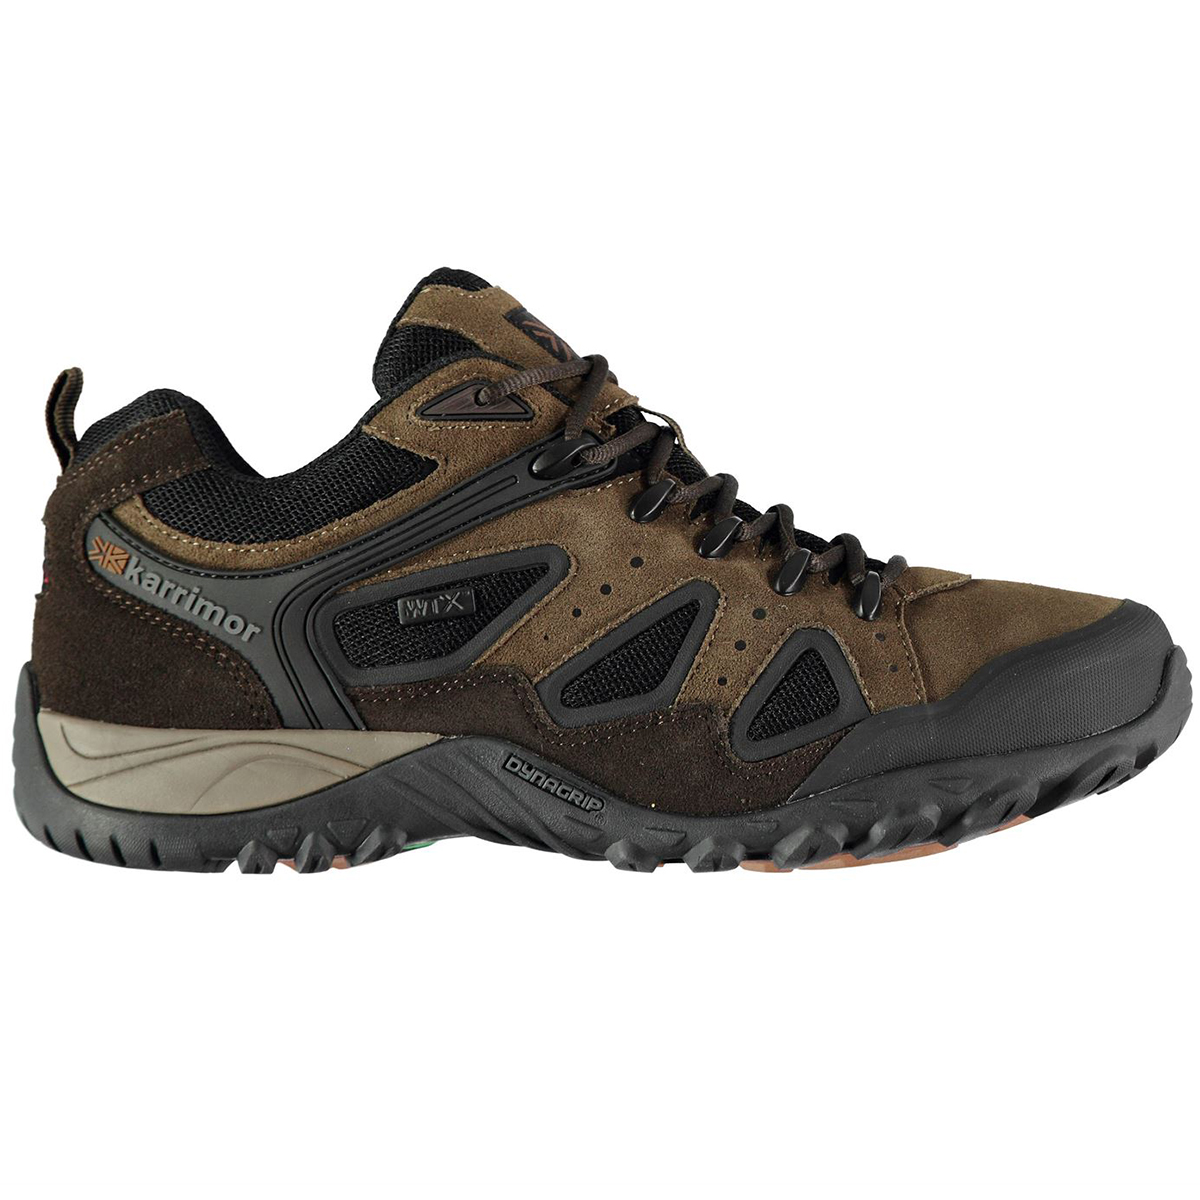 Karrimor Men's Ridge Wtx Waterproof Low Hiking Shoes - Brown, 10.5